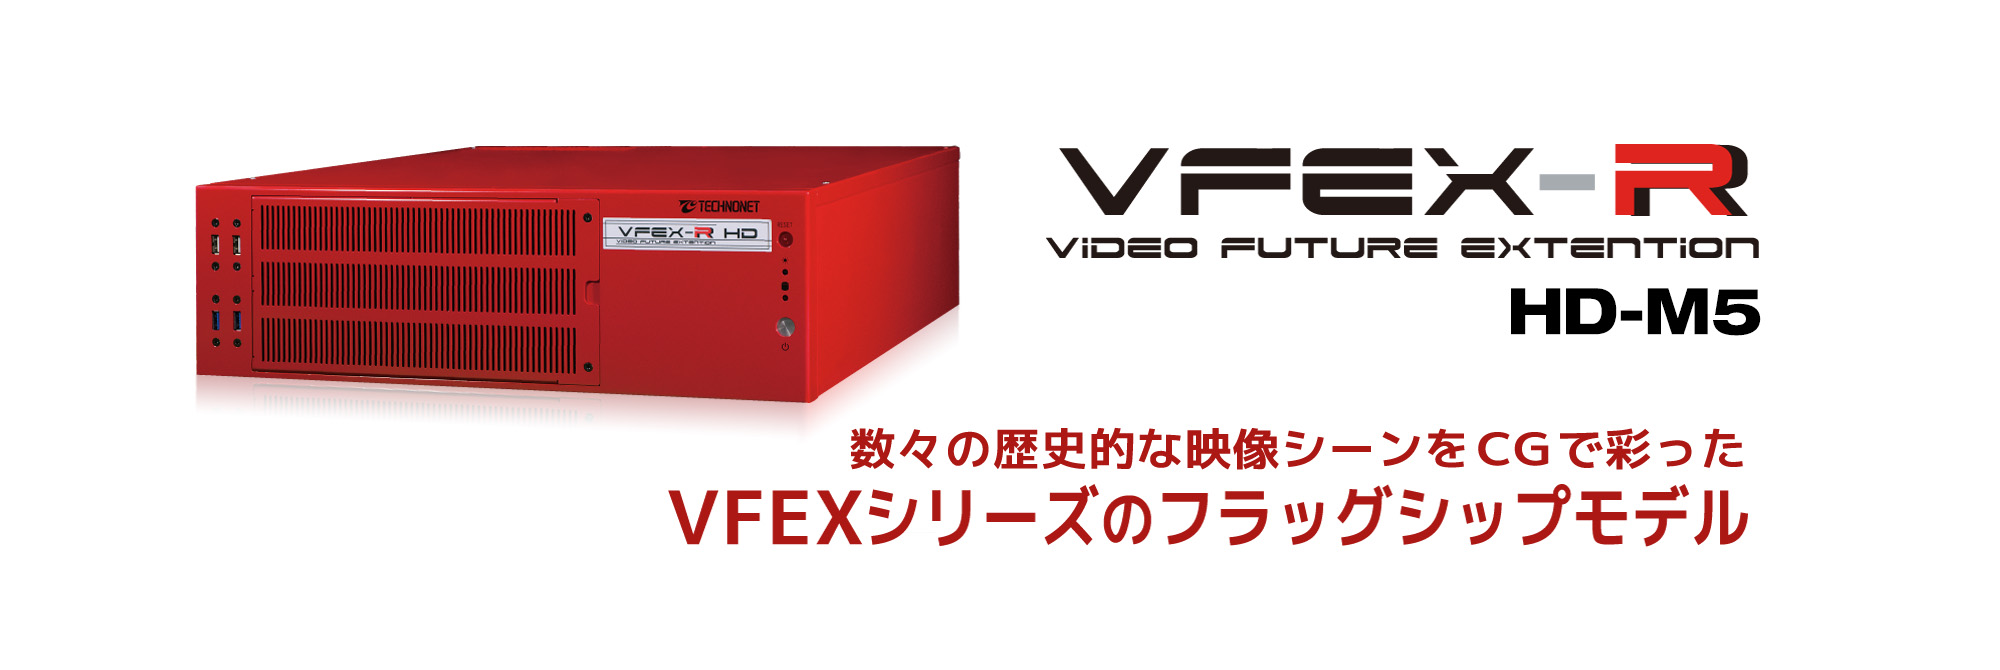 VFEX-R(HD-M5)製品画像